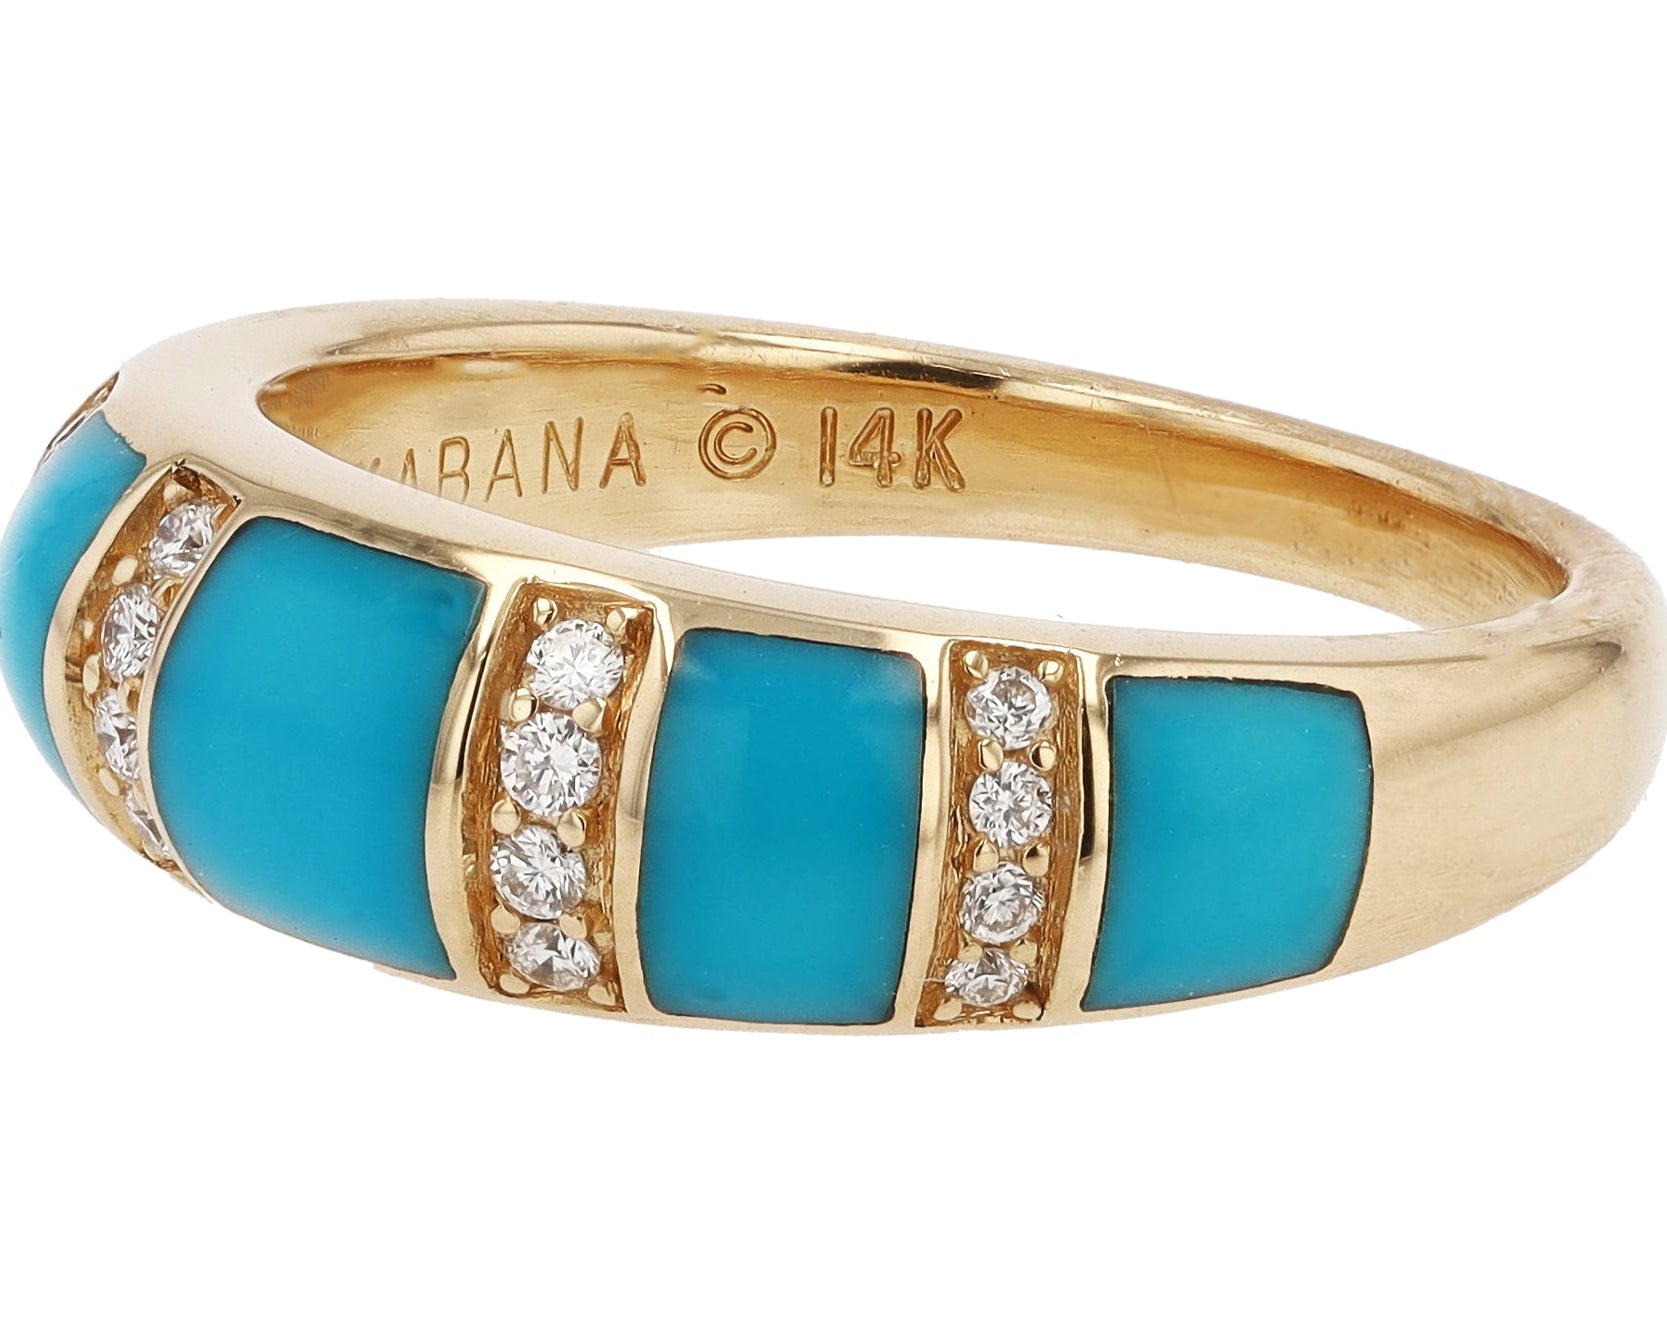 Designer Kabana Inlaid Turquoise and Diamond 14k Gold Band